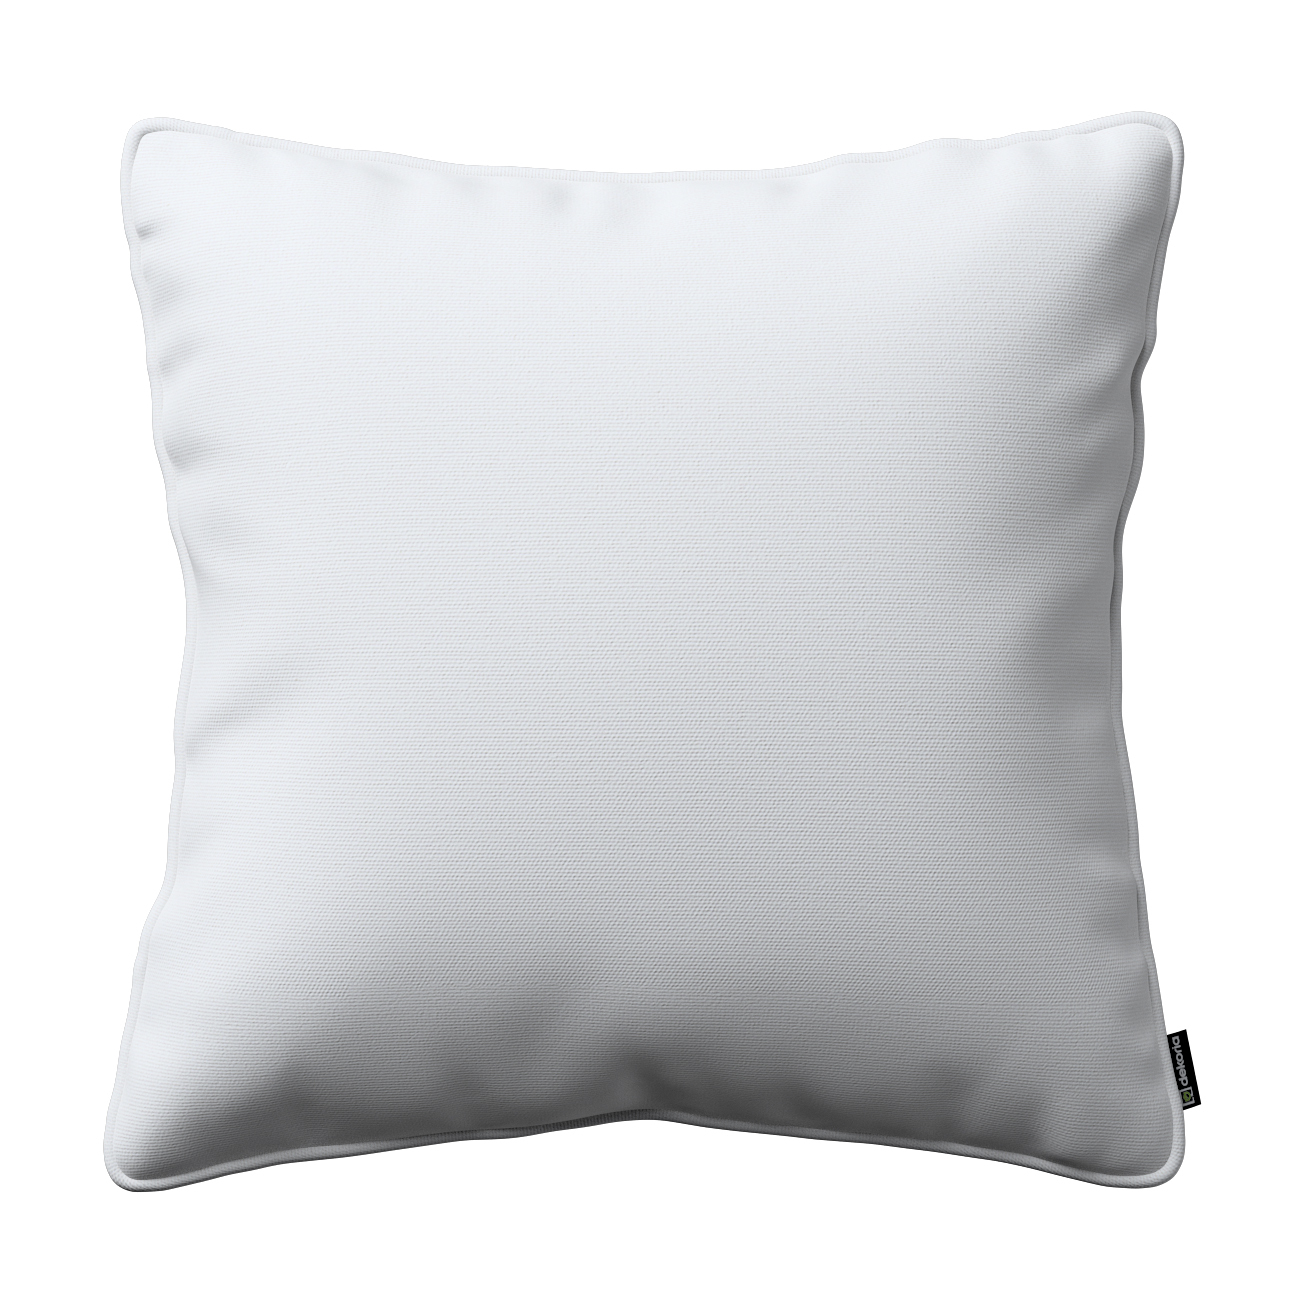 Kissenhülle Gabi mit Paspel, weiß, 45 x 45 cm, Loneta (133-02) günstig online kaufen